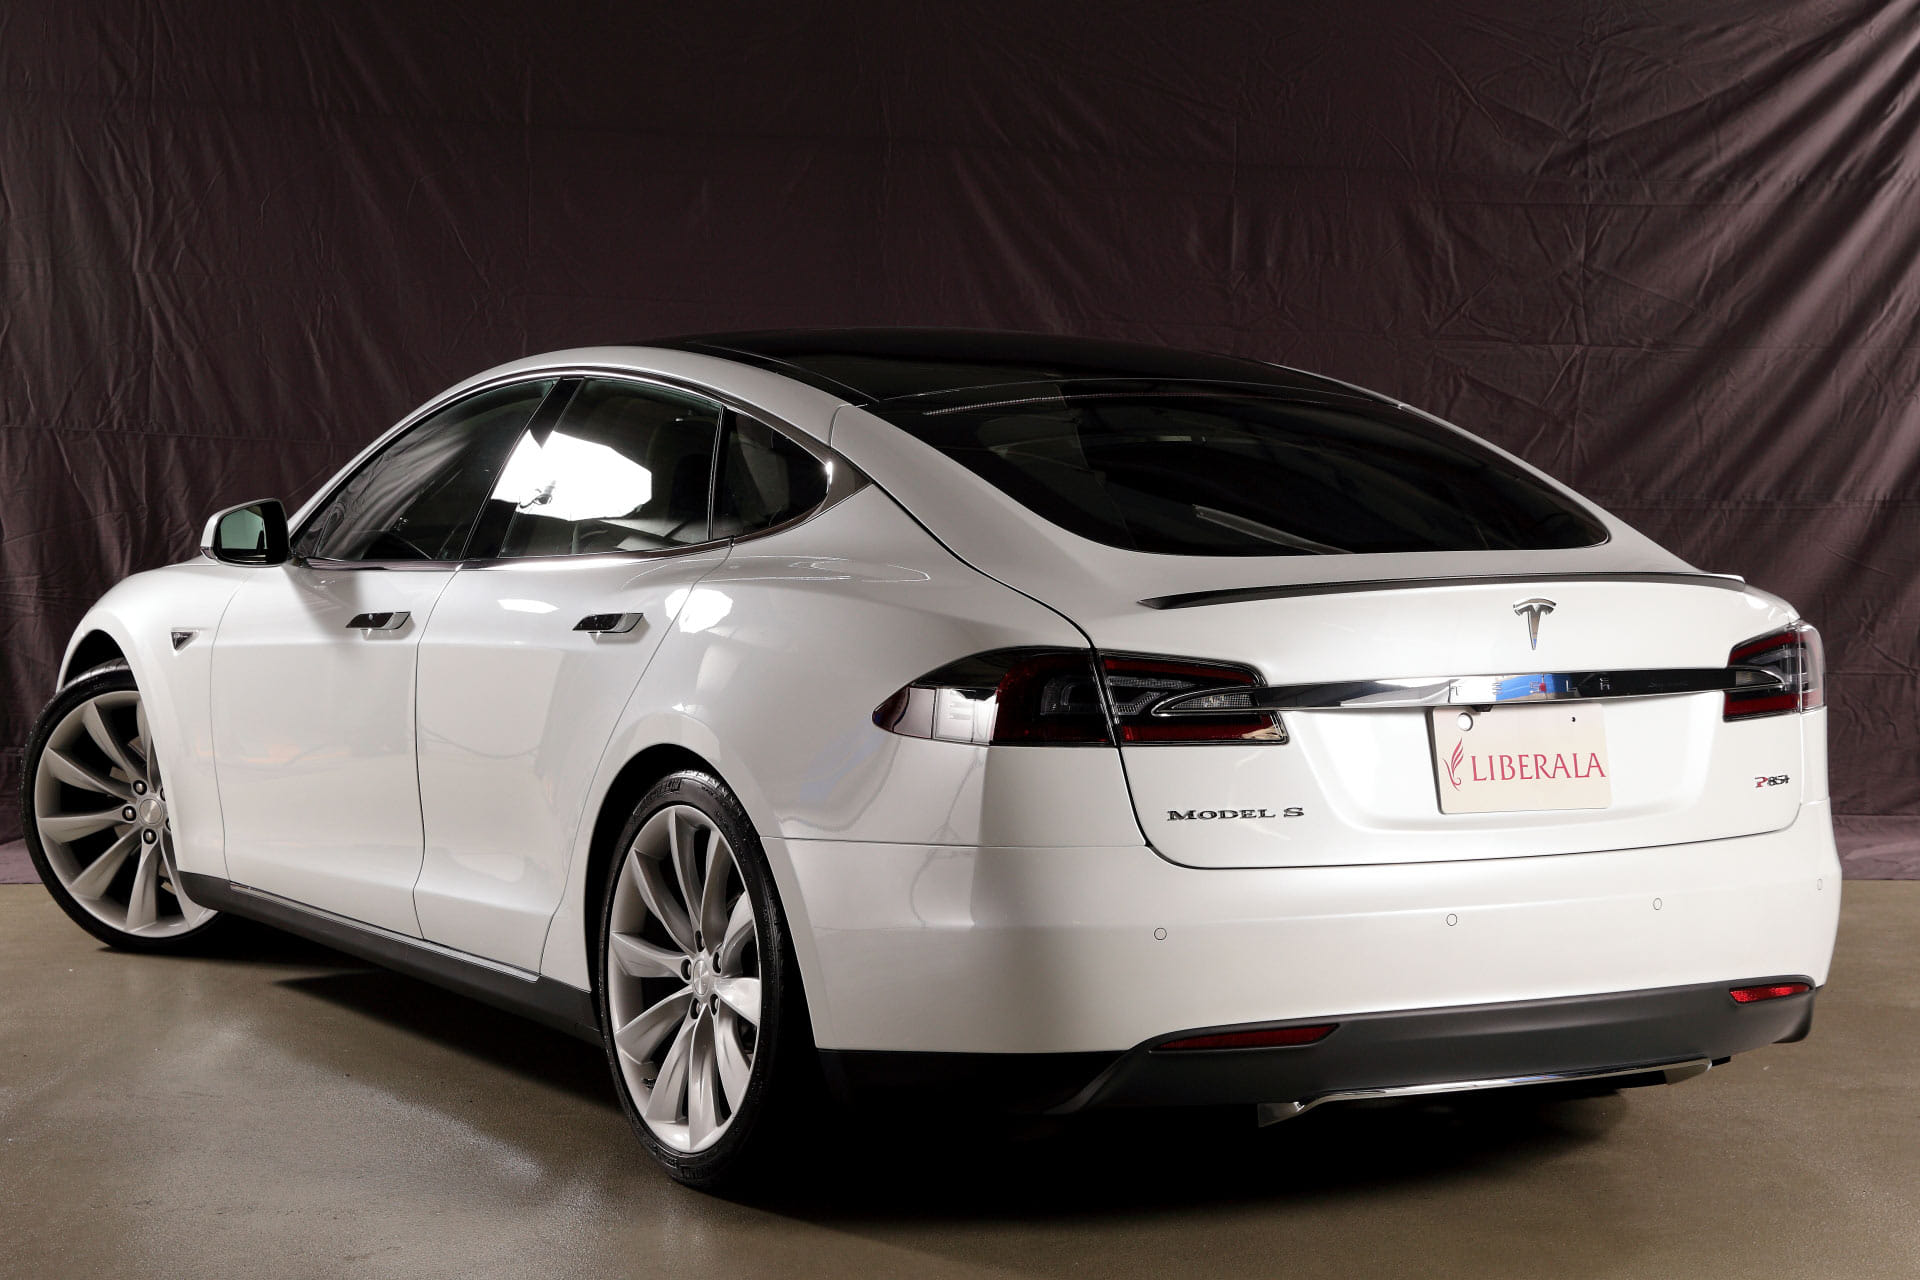 betaling Bijdrager registreren Tesla Motors Model S (2014年式) 在庫詳細／5579 | LIBERALAでテスラモーターズ モデルS P85+を検索